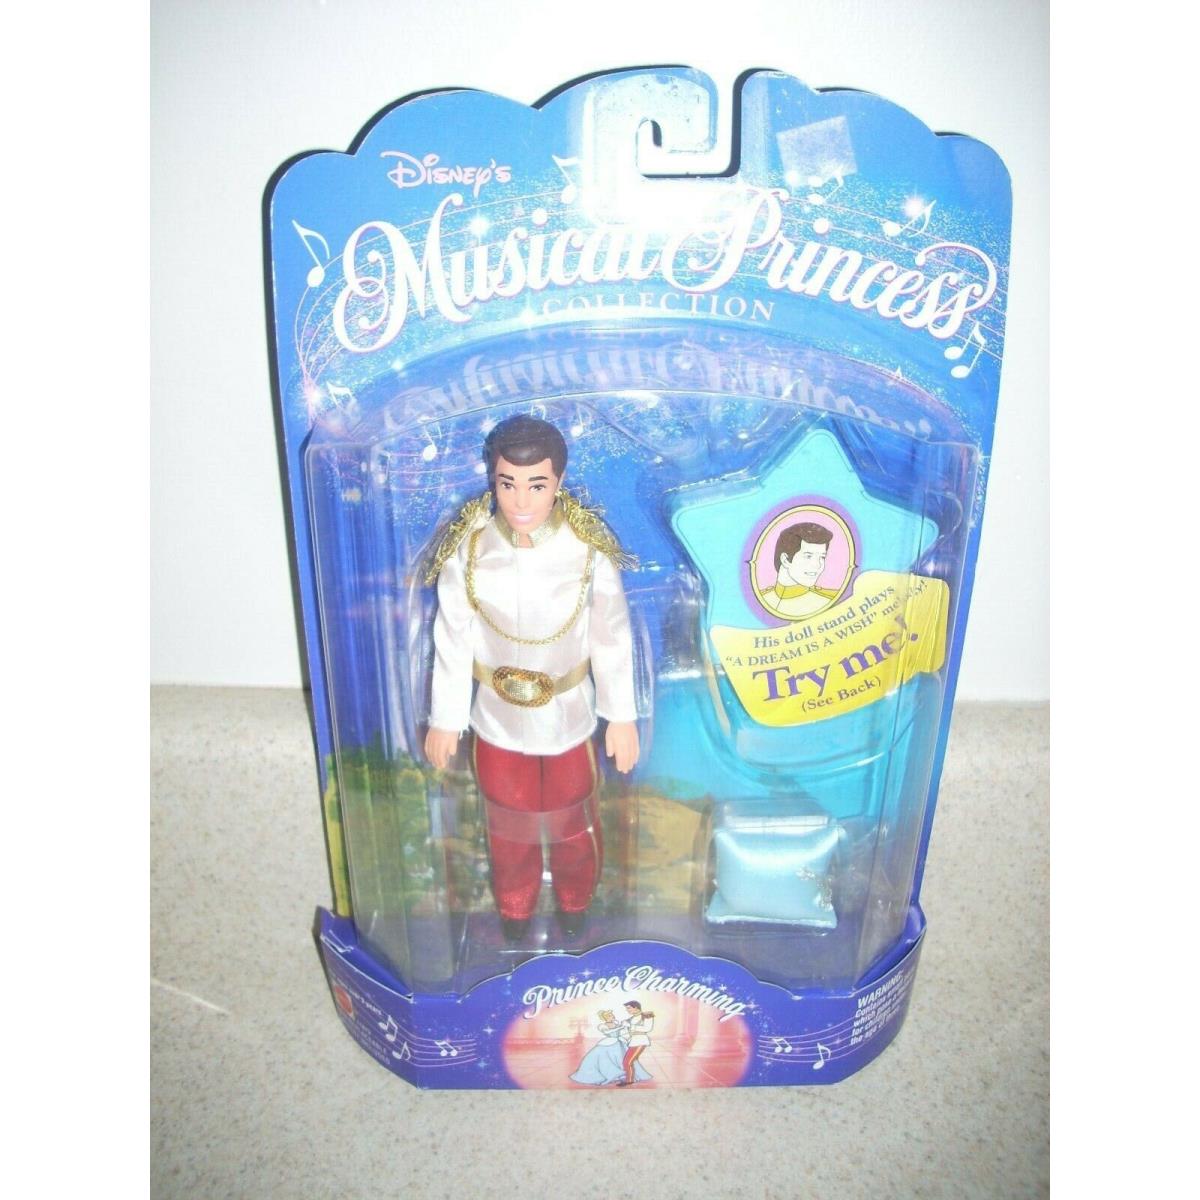 Disney`s Musical Princess Collection Prince Charming Doll 1994 4053